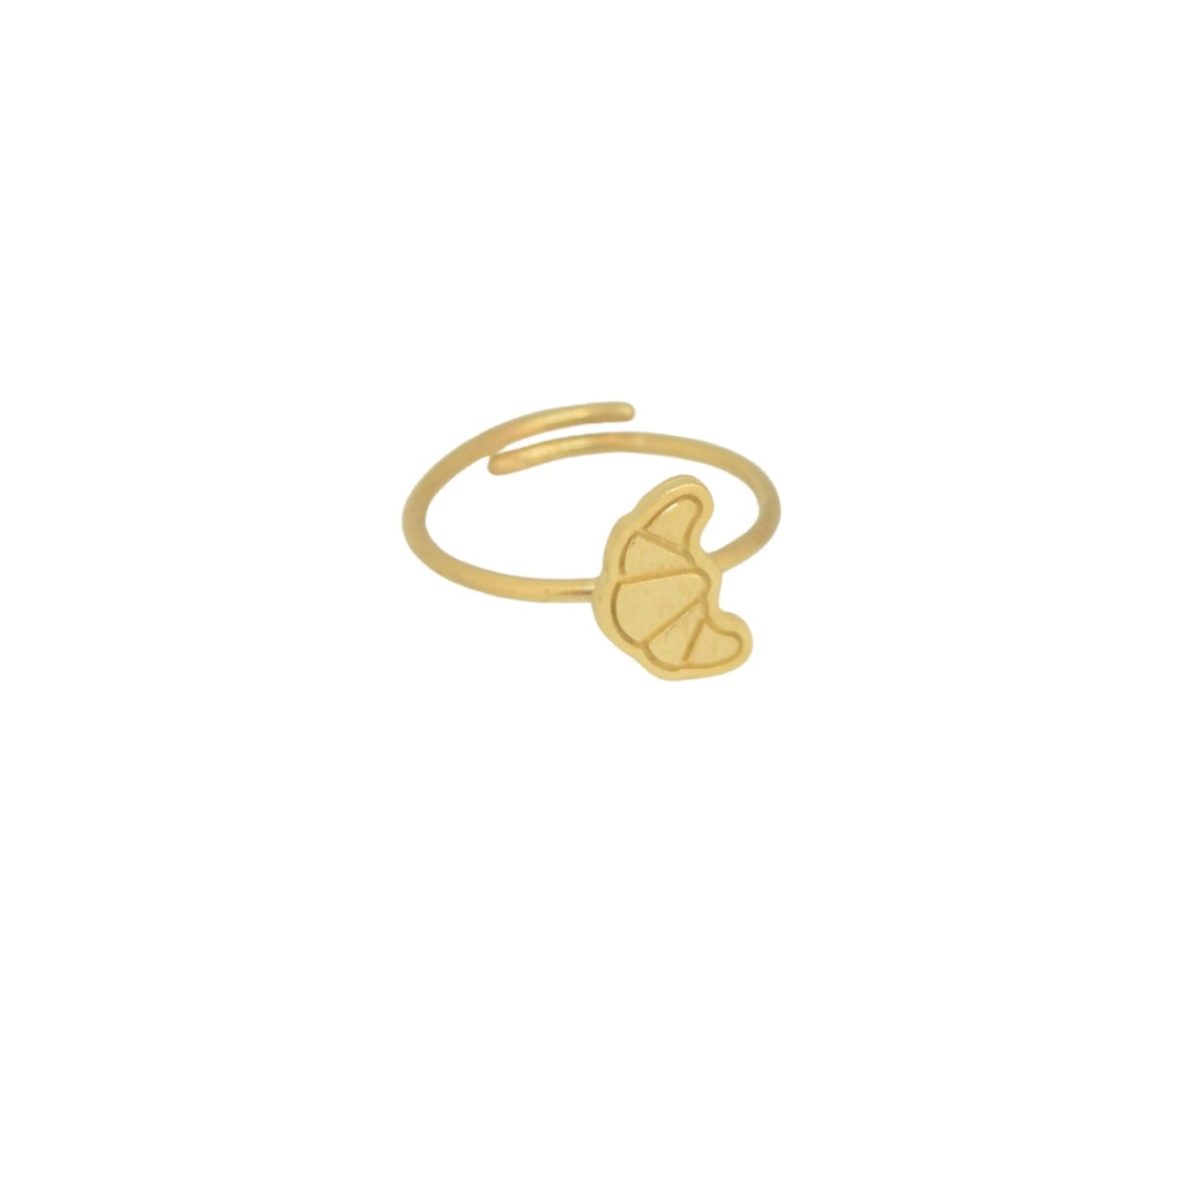 “Croissant” επίχρυσο δαχτυλίδι “Croissant” επίχρυσο δαχτυλίδι “Croissant” επίχρυσο δαχτυλίδι 4